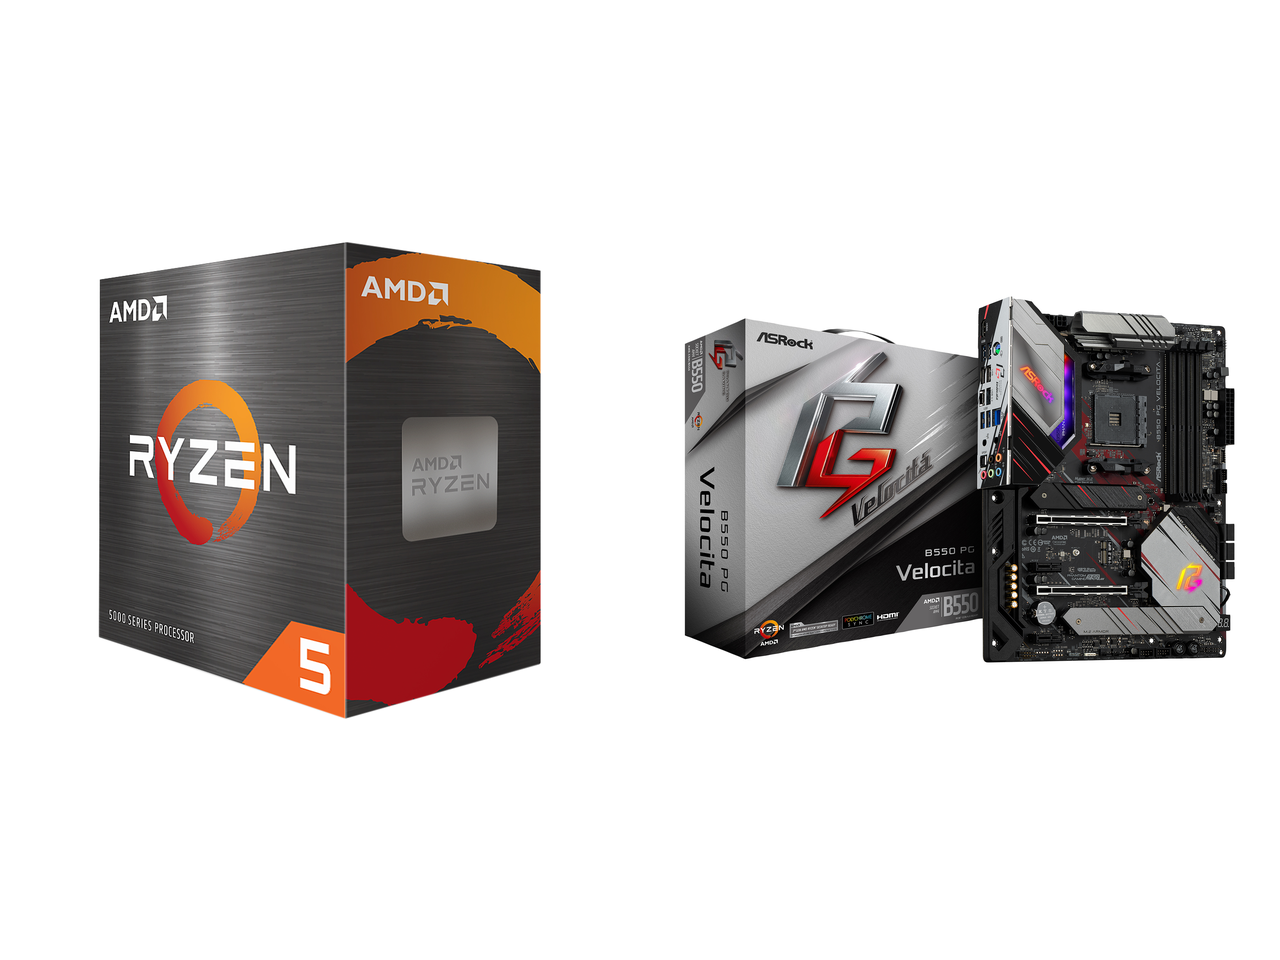 AMD Ryzen 5 5600X Desktop Processor + ASRock Phantom Gaming B550 Motherboard $364 + Free Shipping